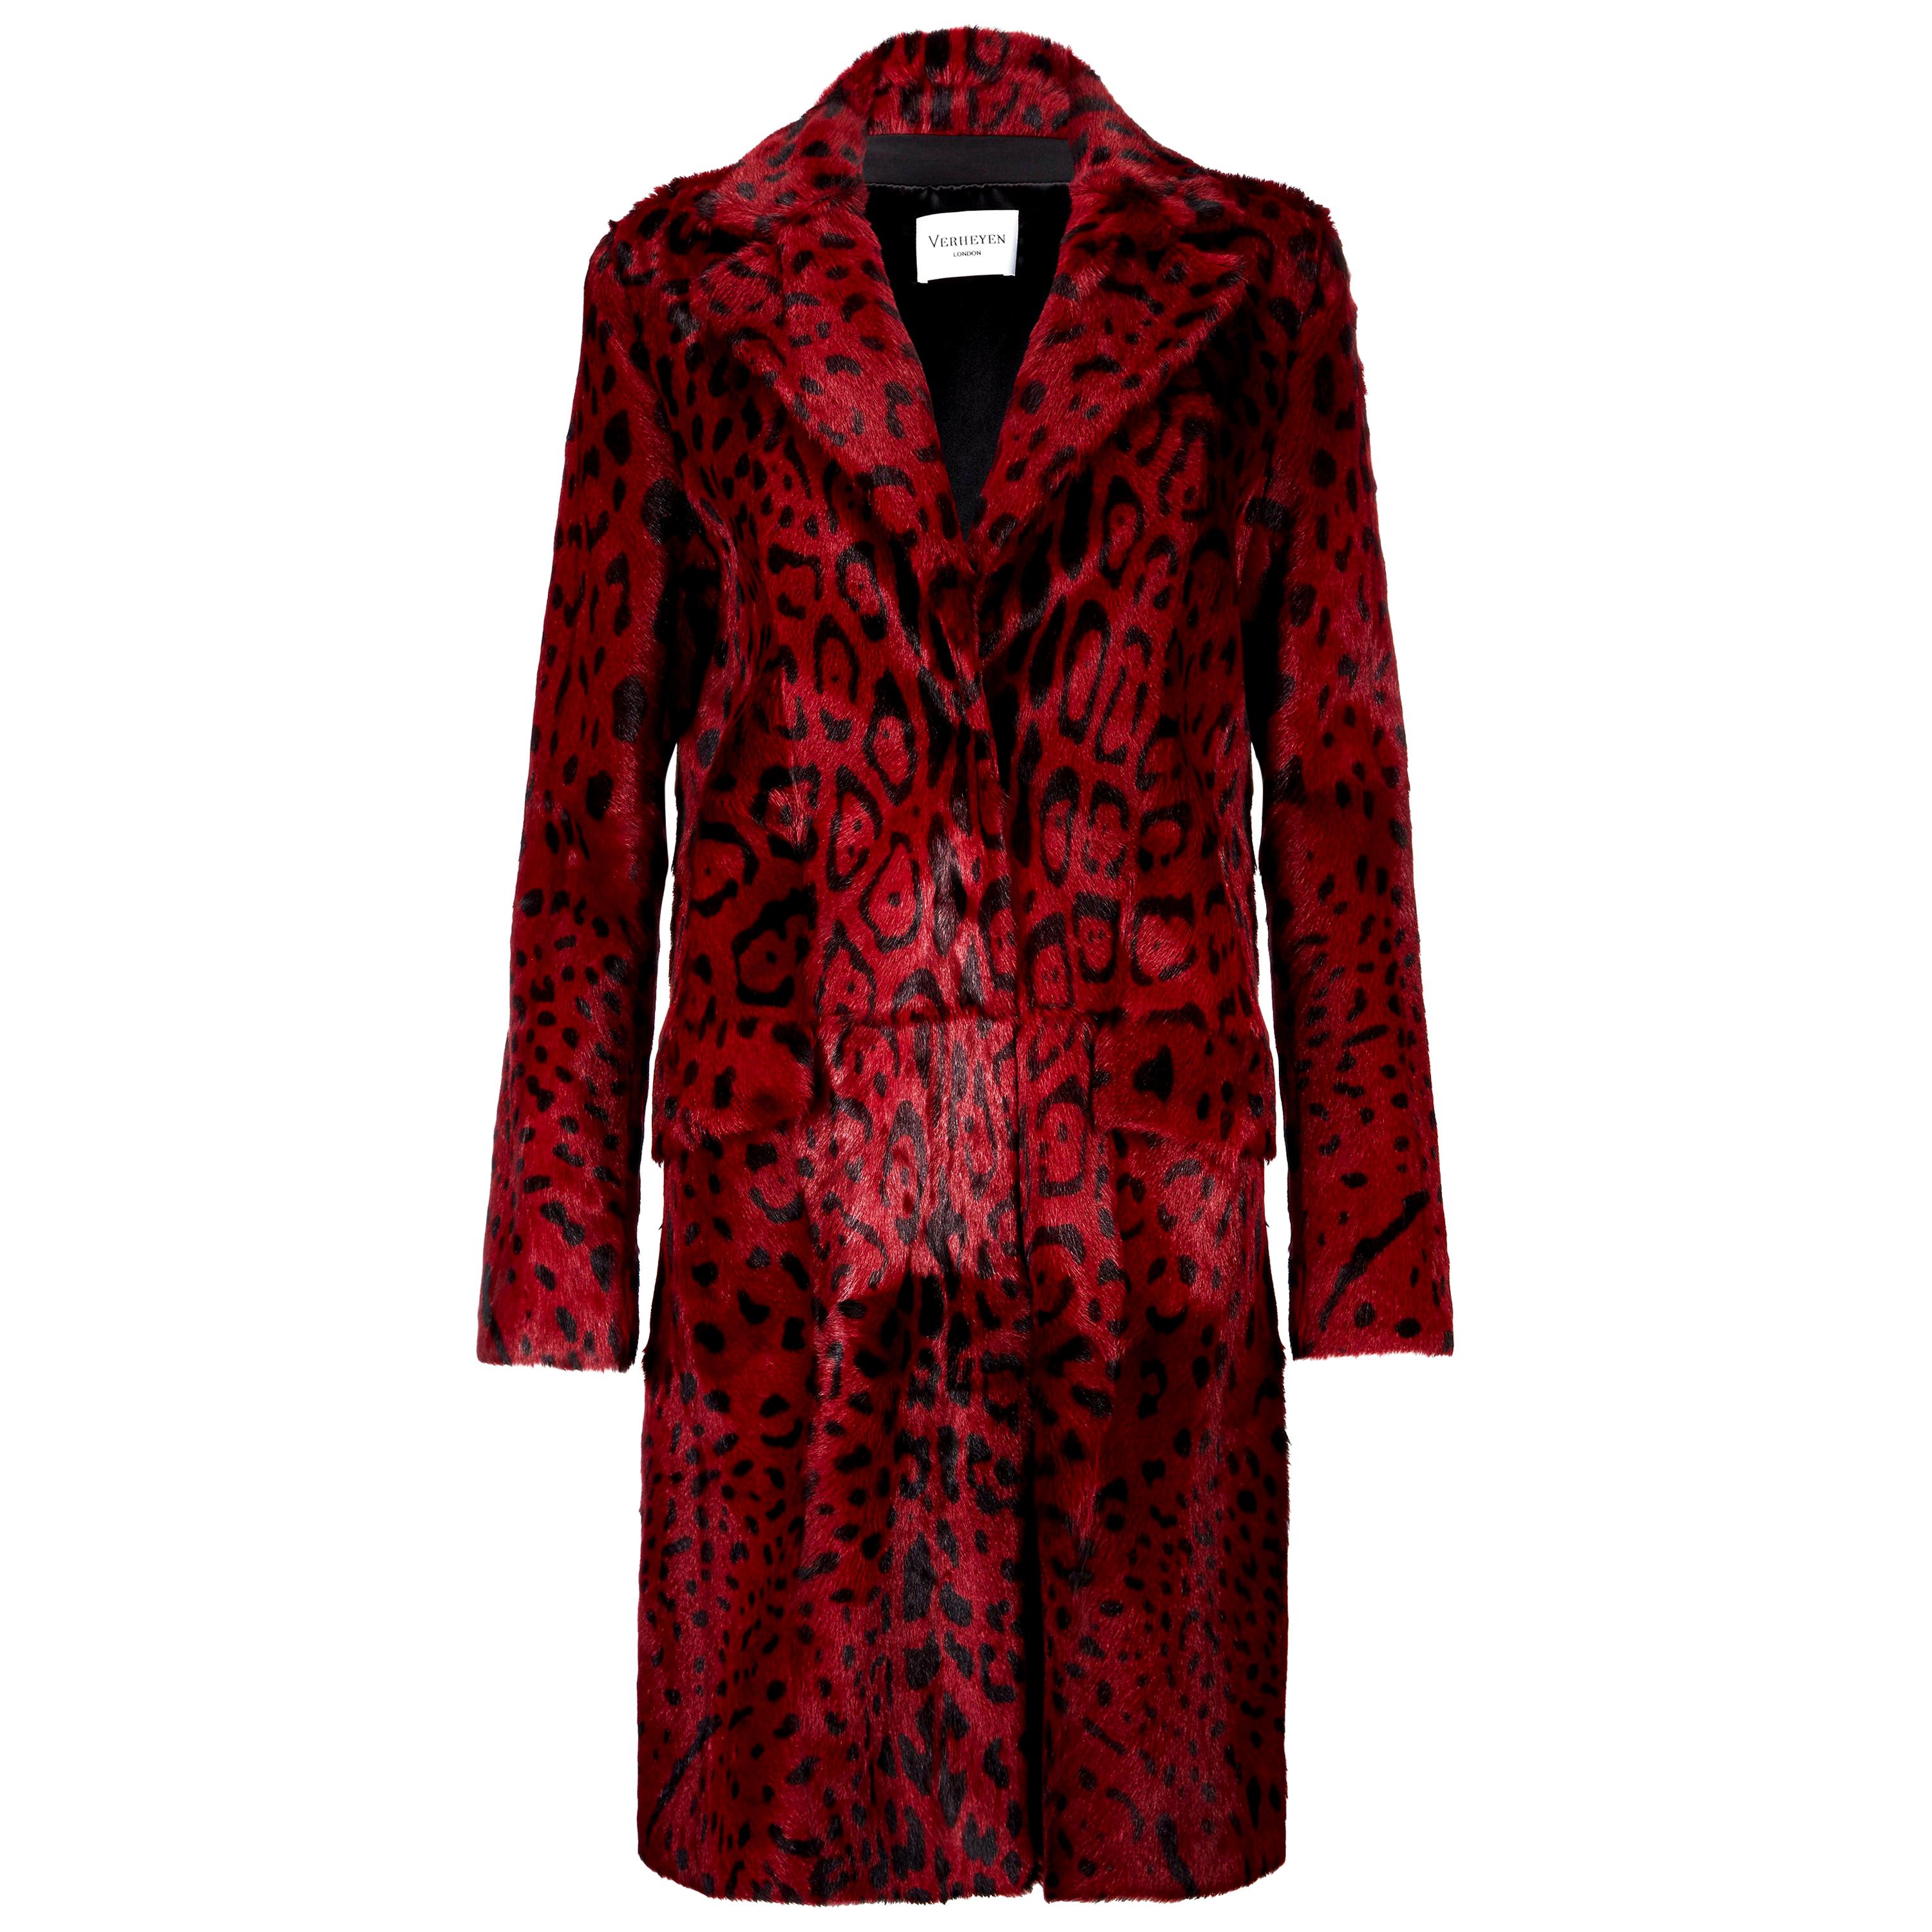 Verheyen London Leopard Print Coat in Red Ruby Goat Hair Fur UK 12  - Brand New 